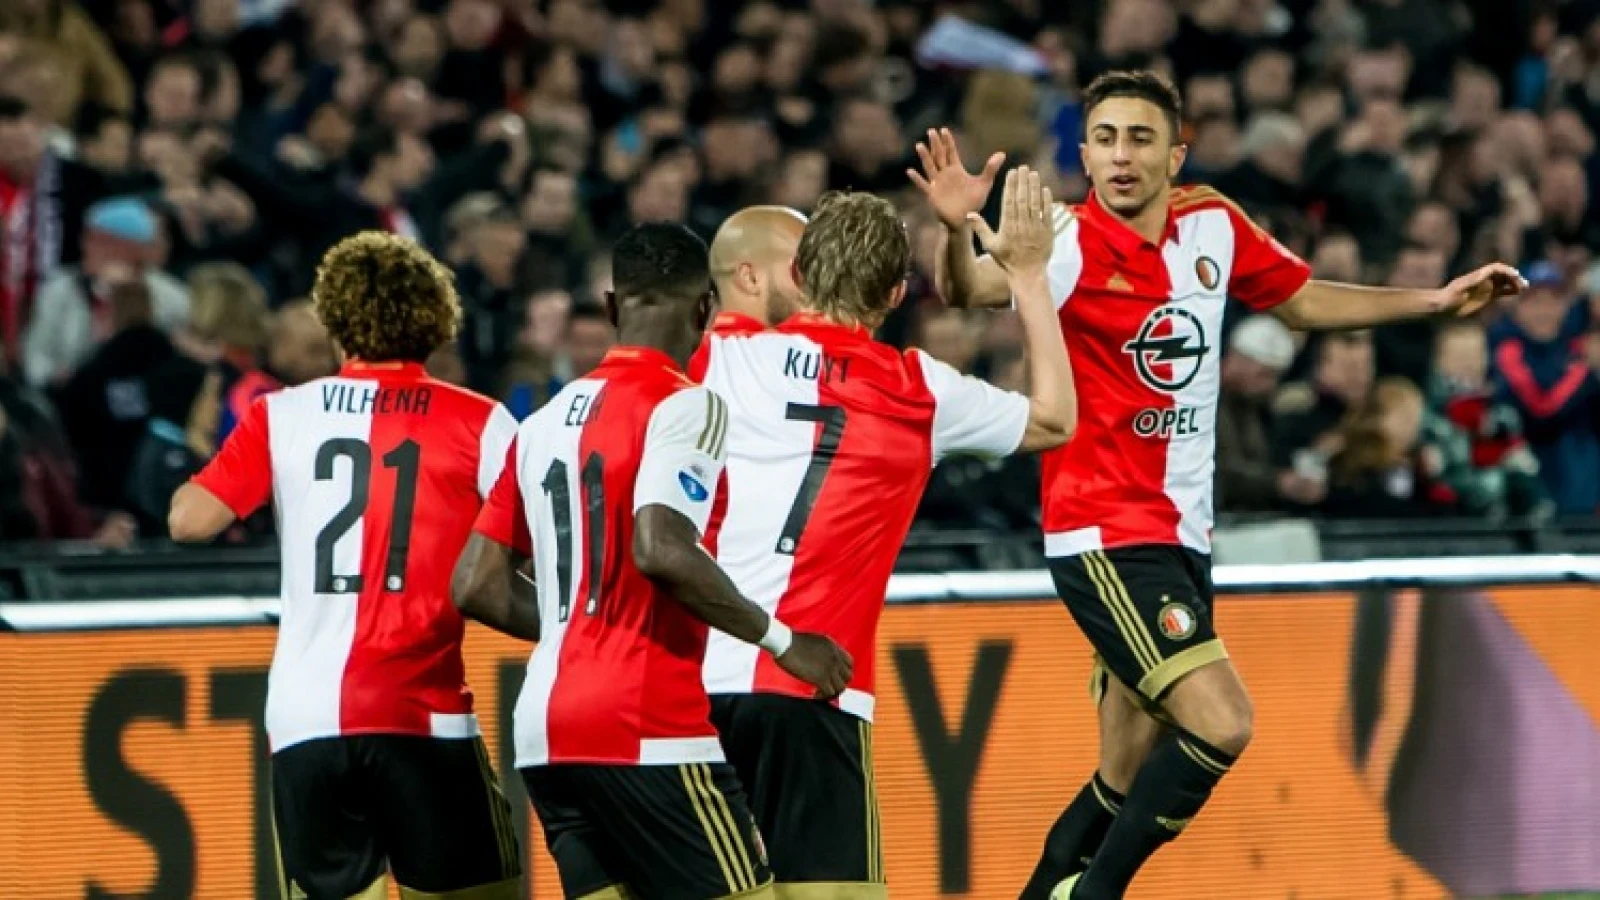 Opstelling | Feyenoord met veel verrassingen tegen Heracles Almelo